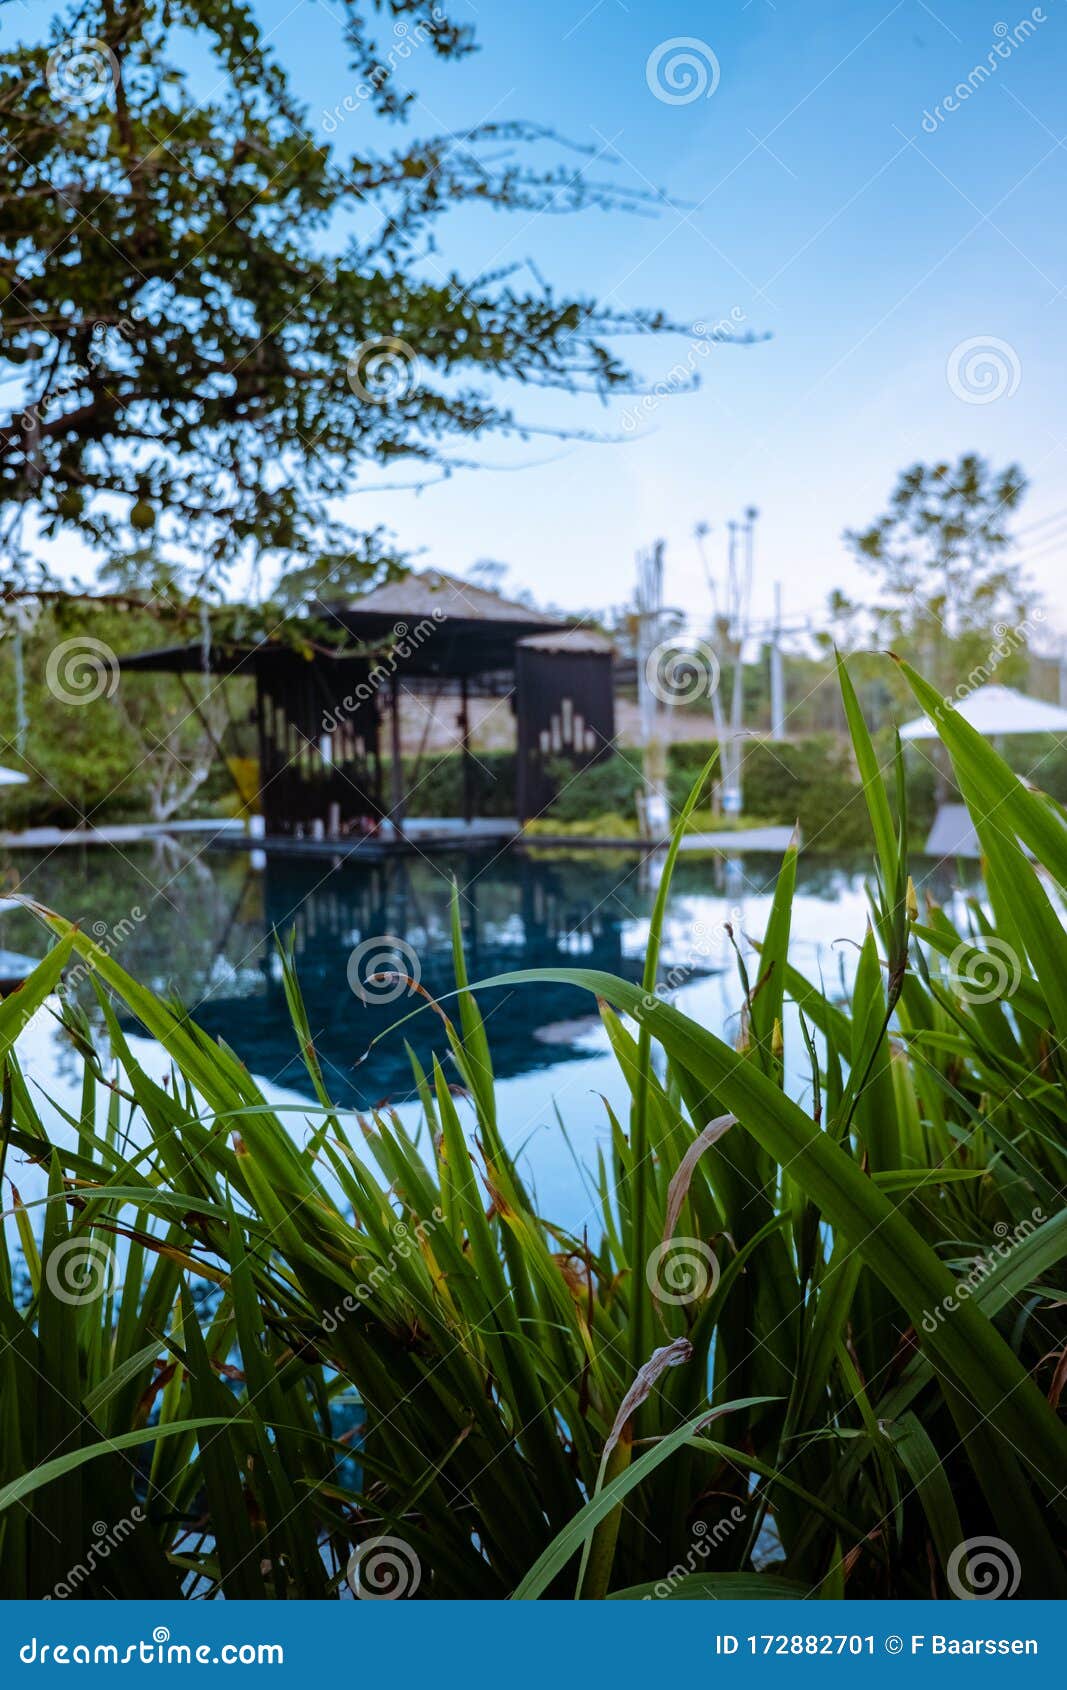 krabi thailand january 2020, an eco friendly luxuri resort in ao nang whit a tropical garden around anana krabi